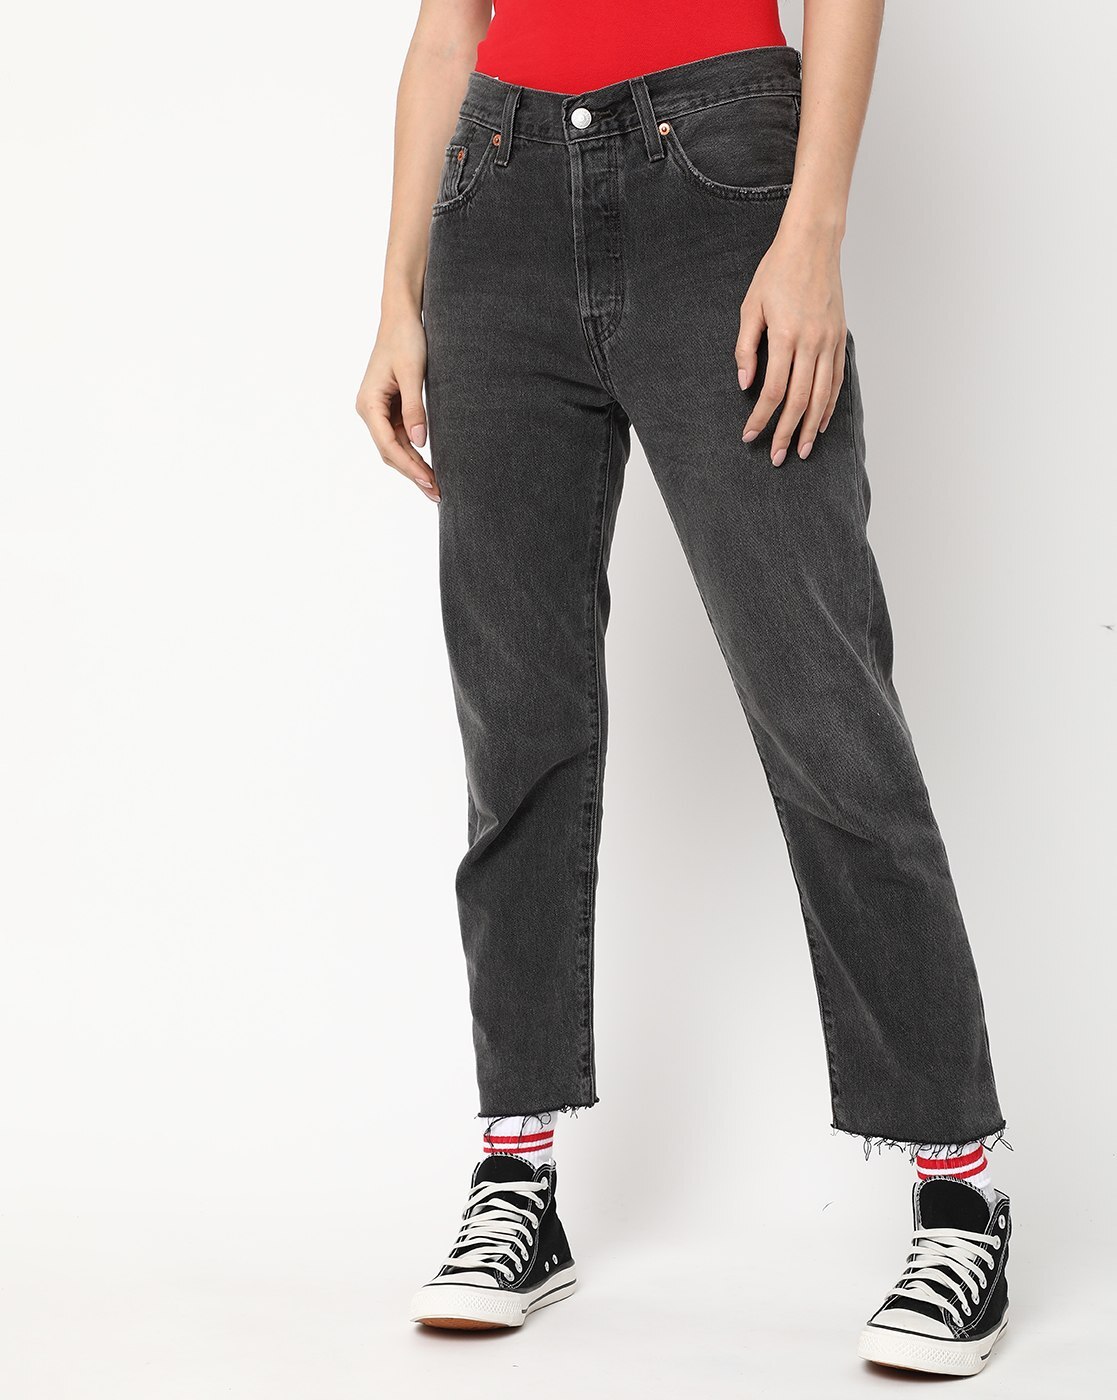 Buy Grey Jeans & Jeggings for Women by LEVIS Online 